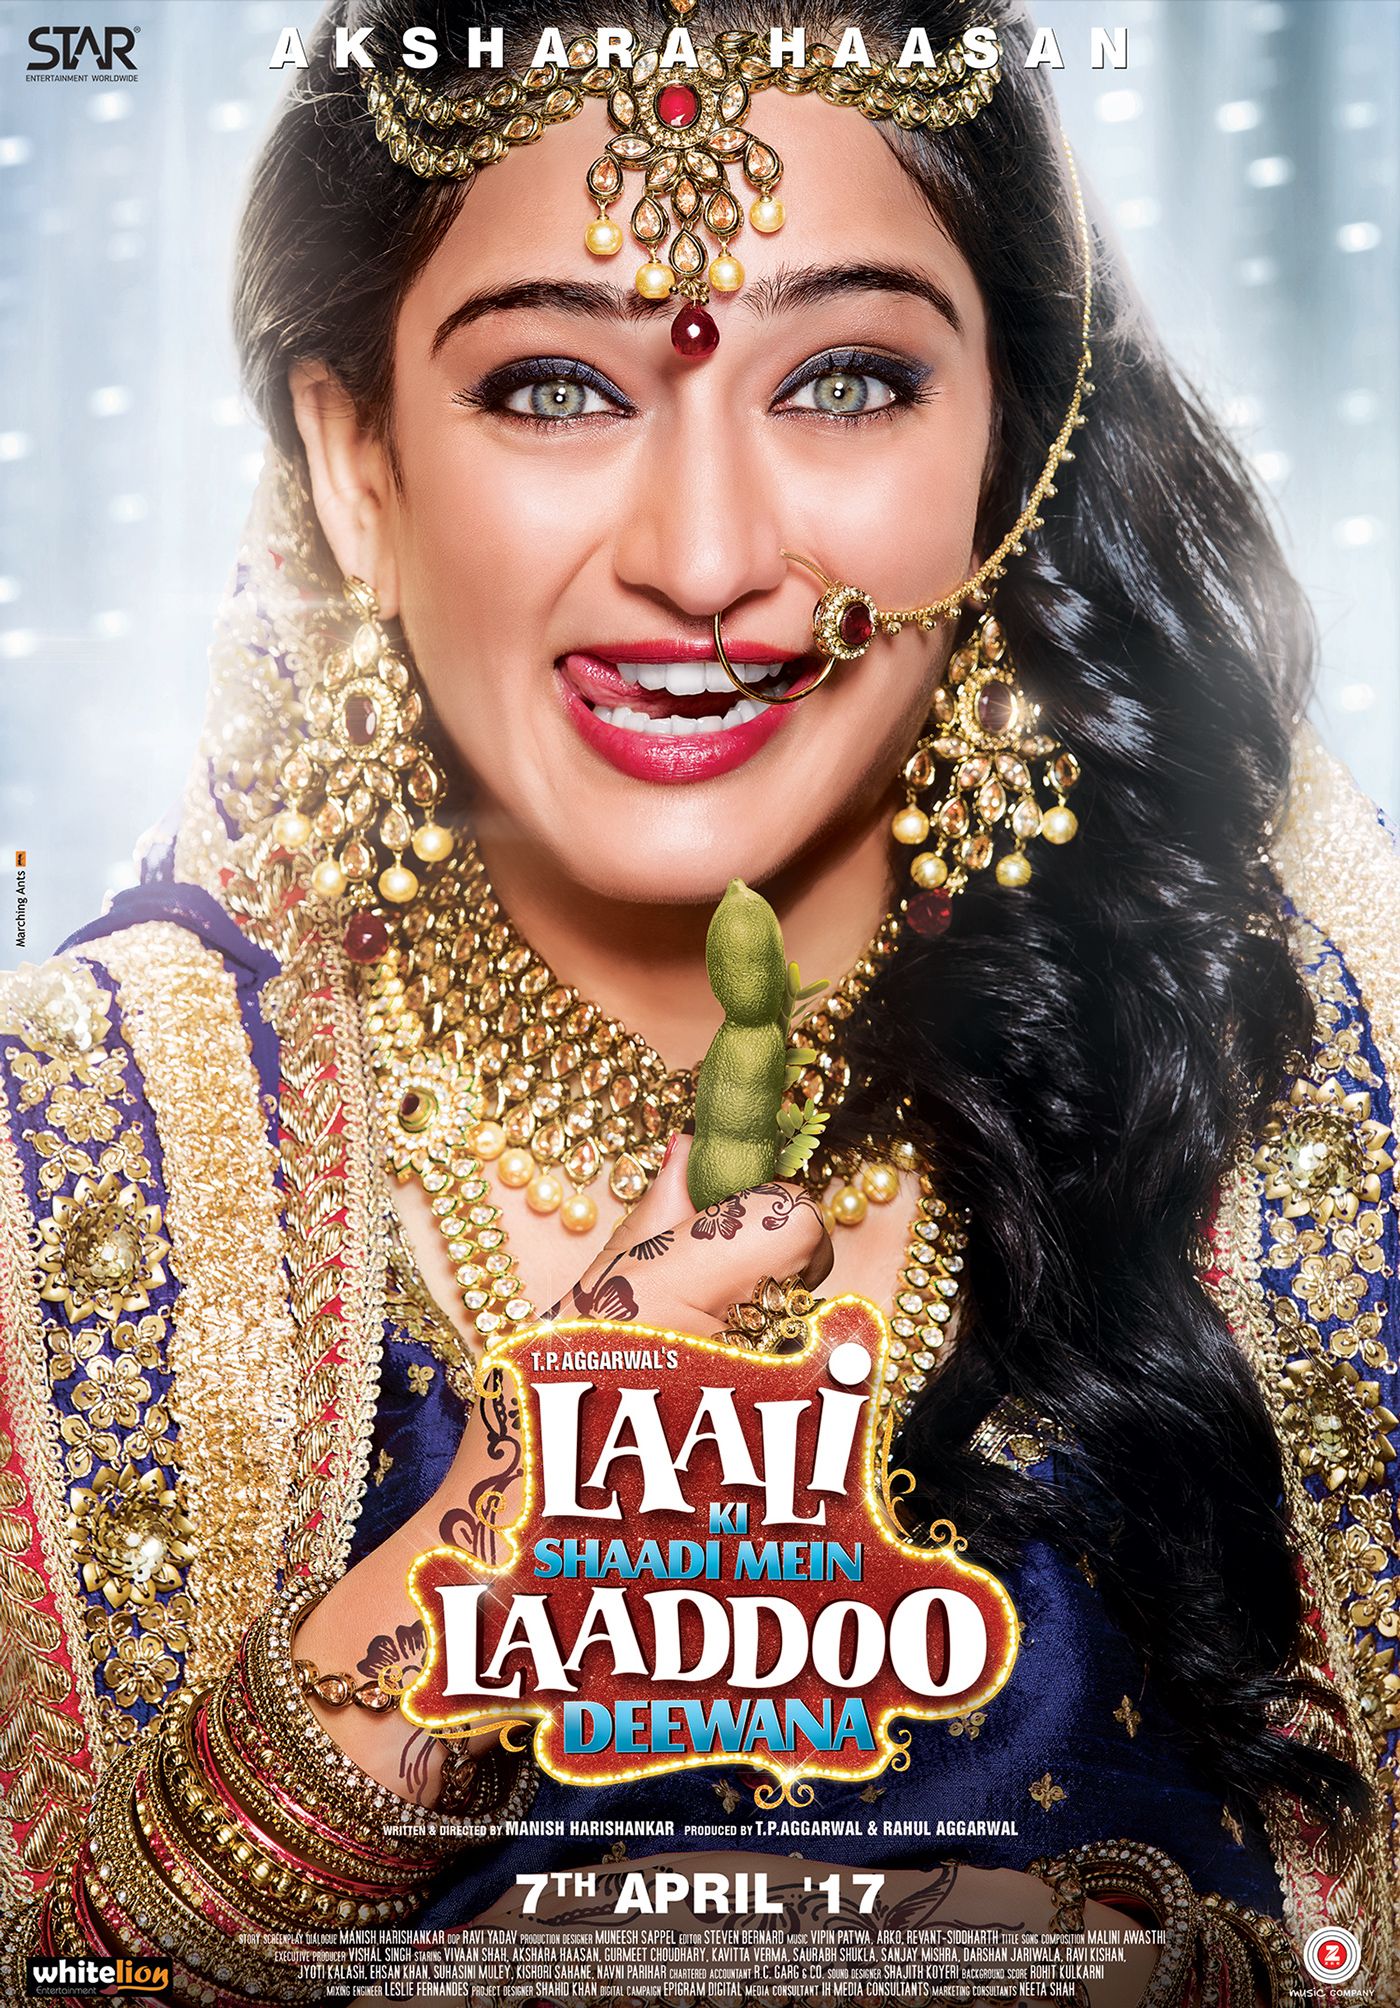 Laali Ki Shadi Mein Laddoo Deewana On Behance - Laali Ki Shaadi Mein Laddoo Deewana Full Movie , HD Wallpaper & Backgrounds